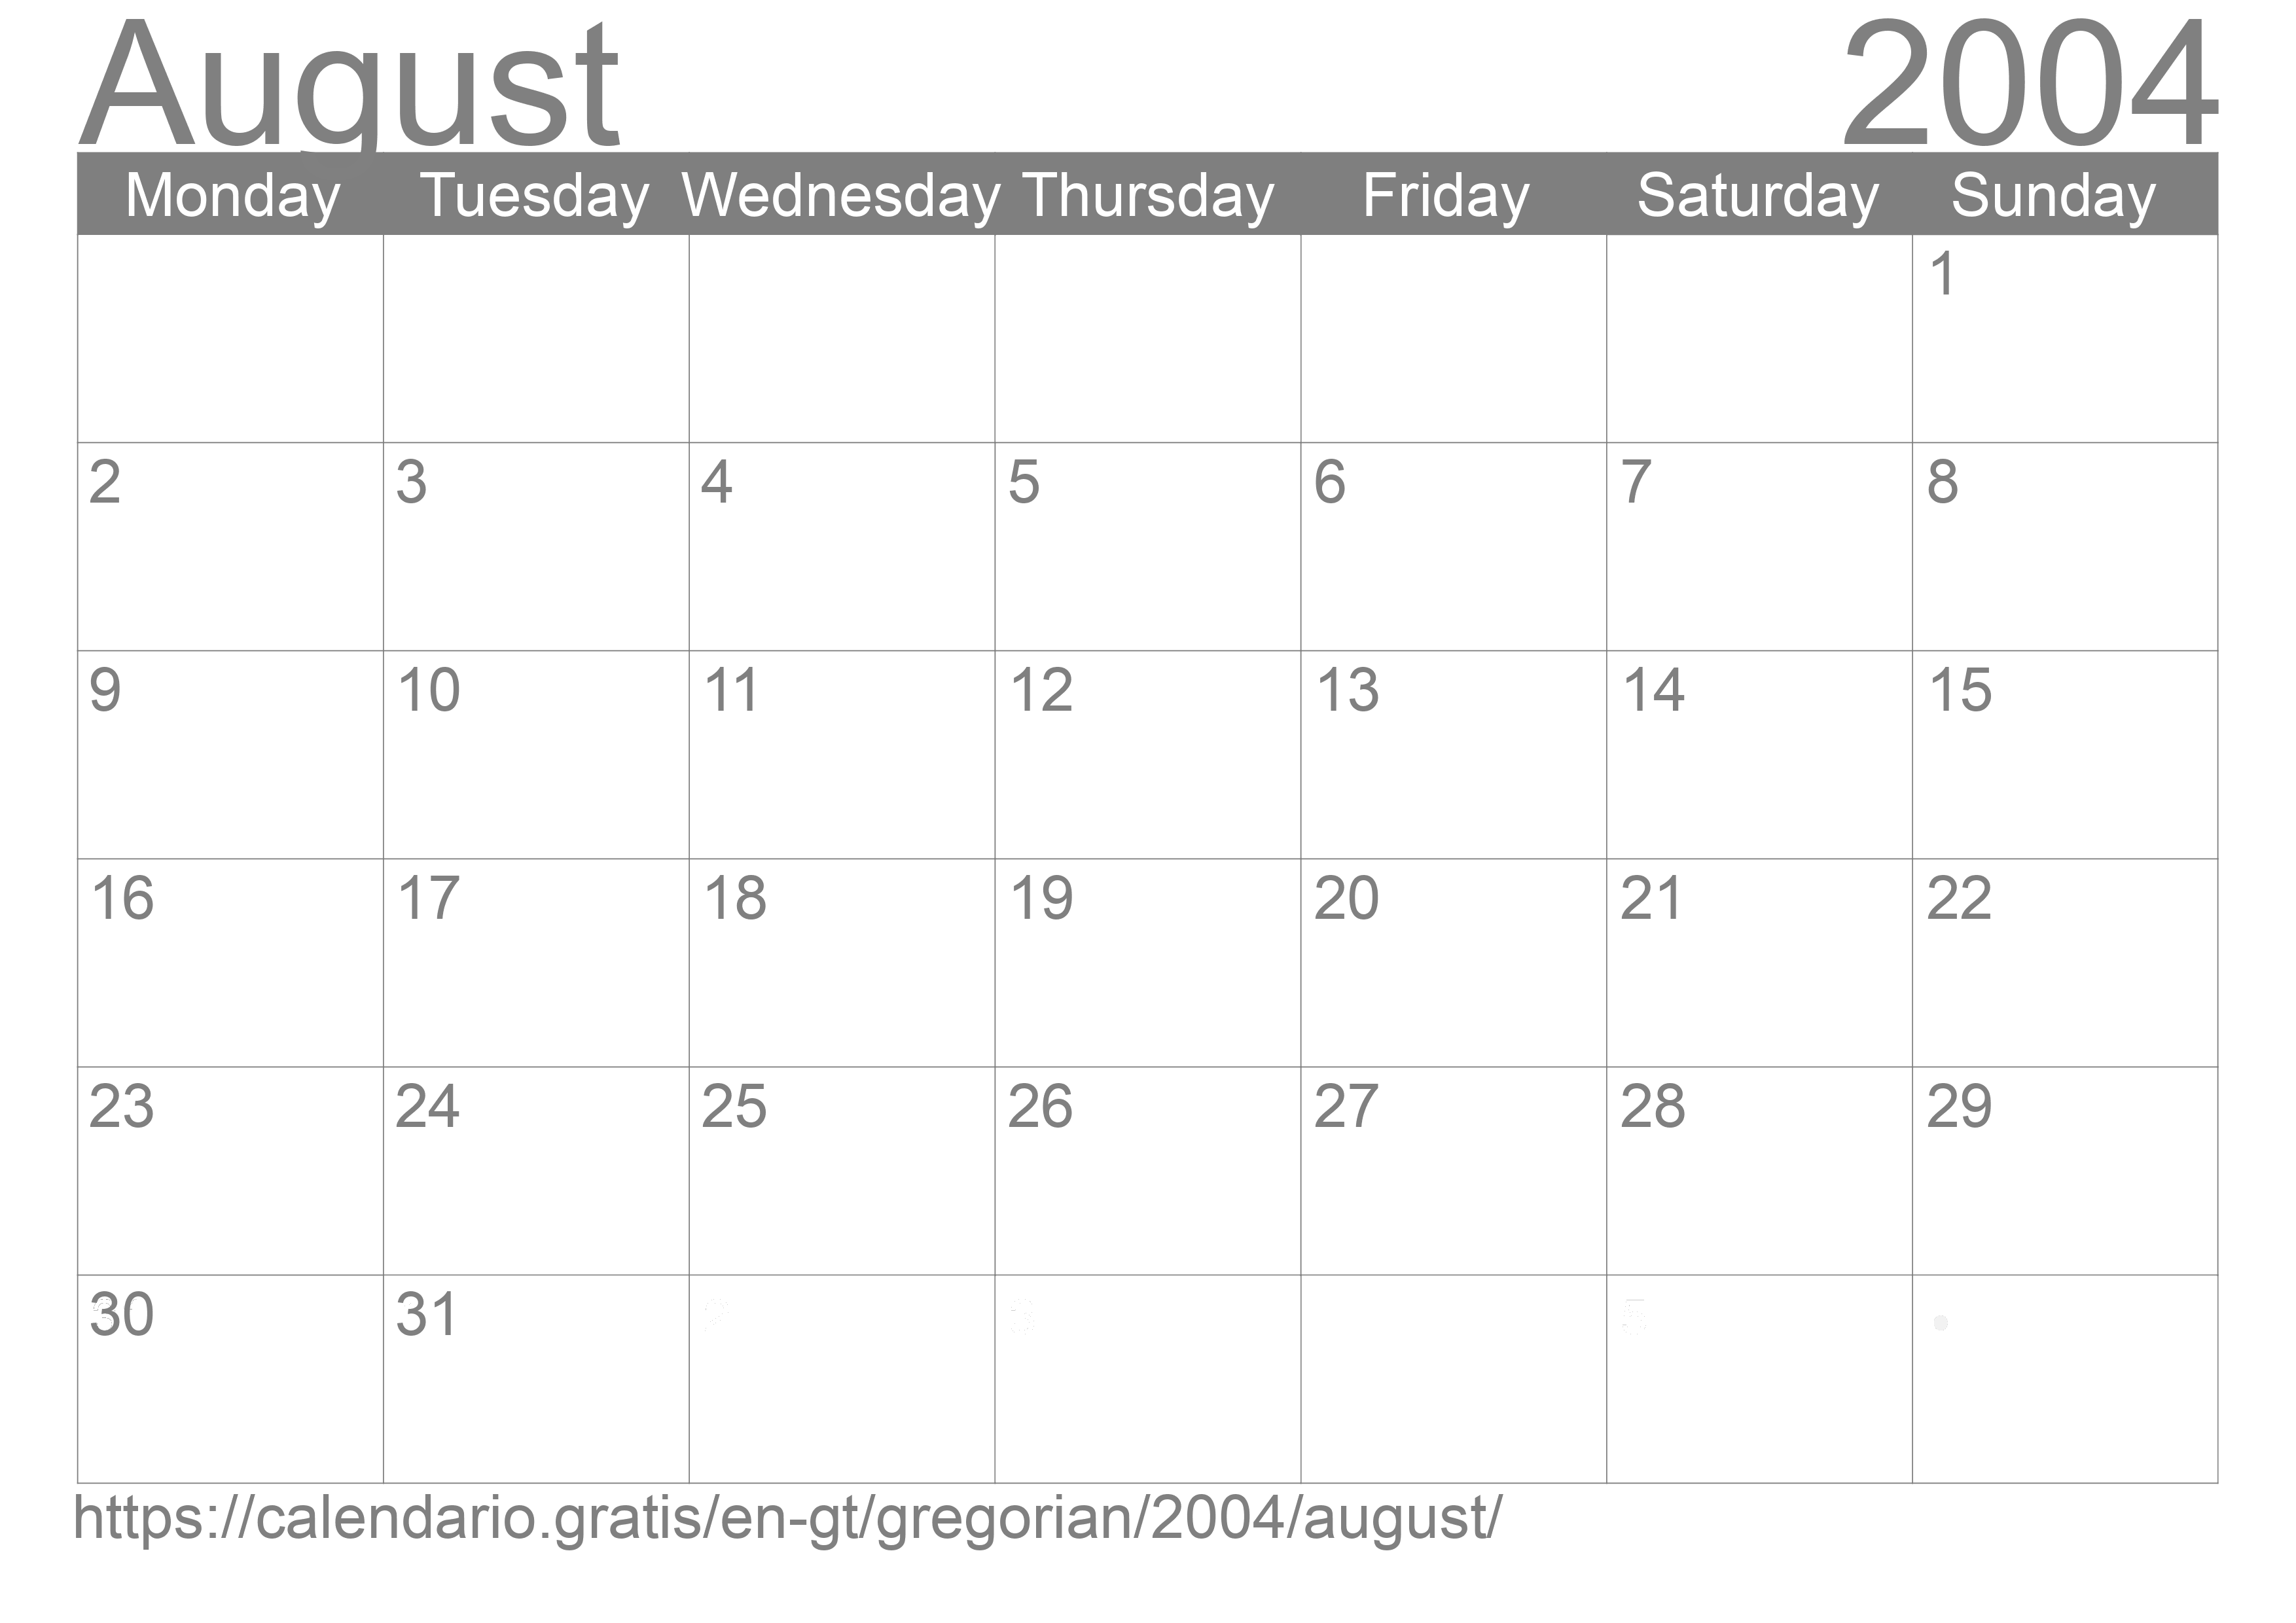 Calendar August 2004 to print